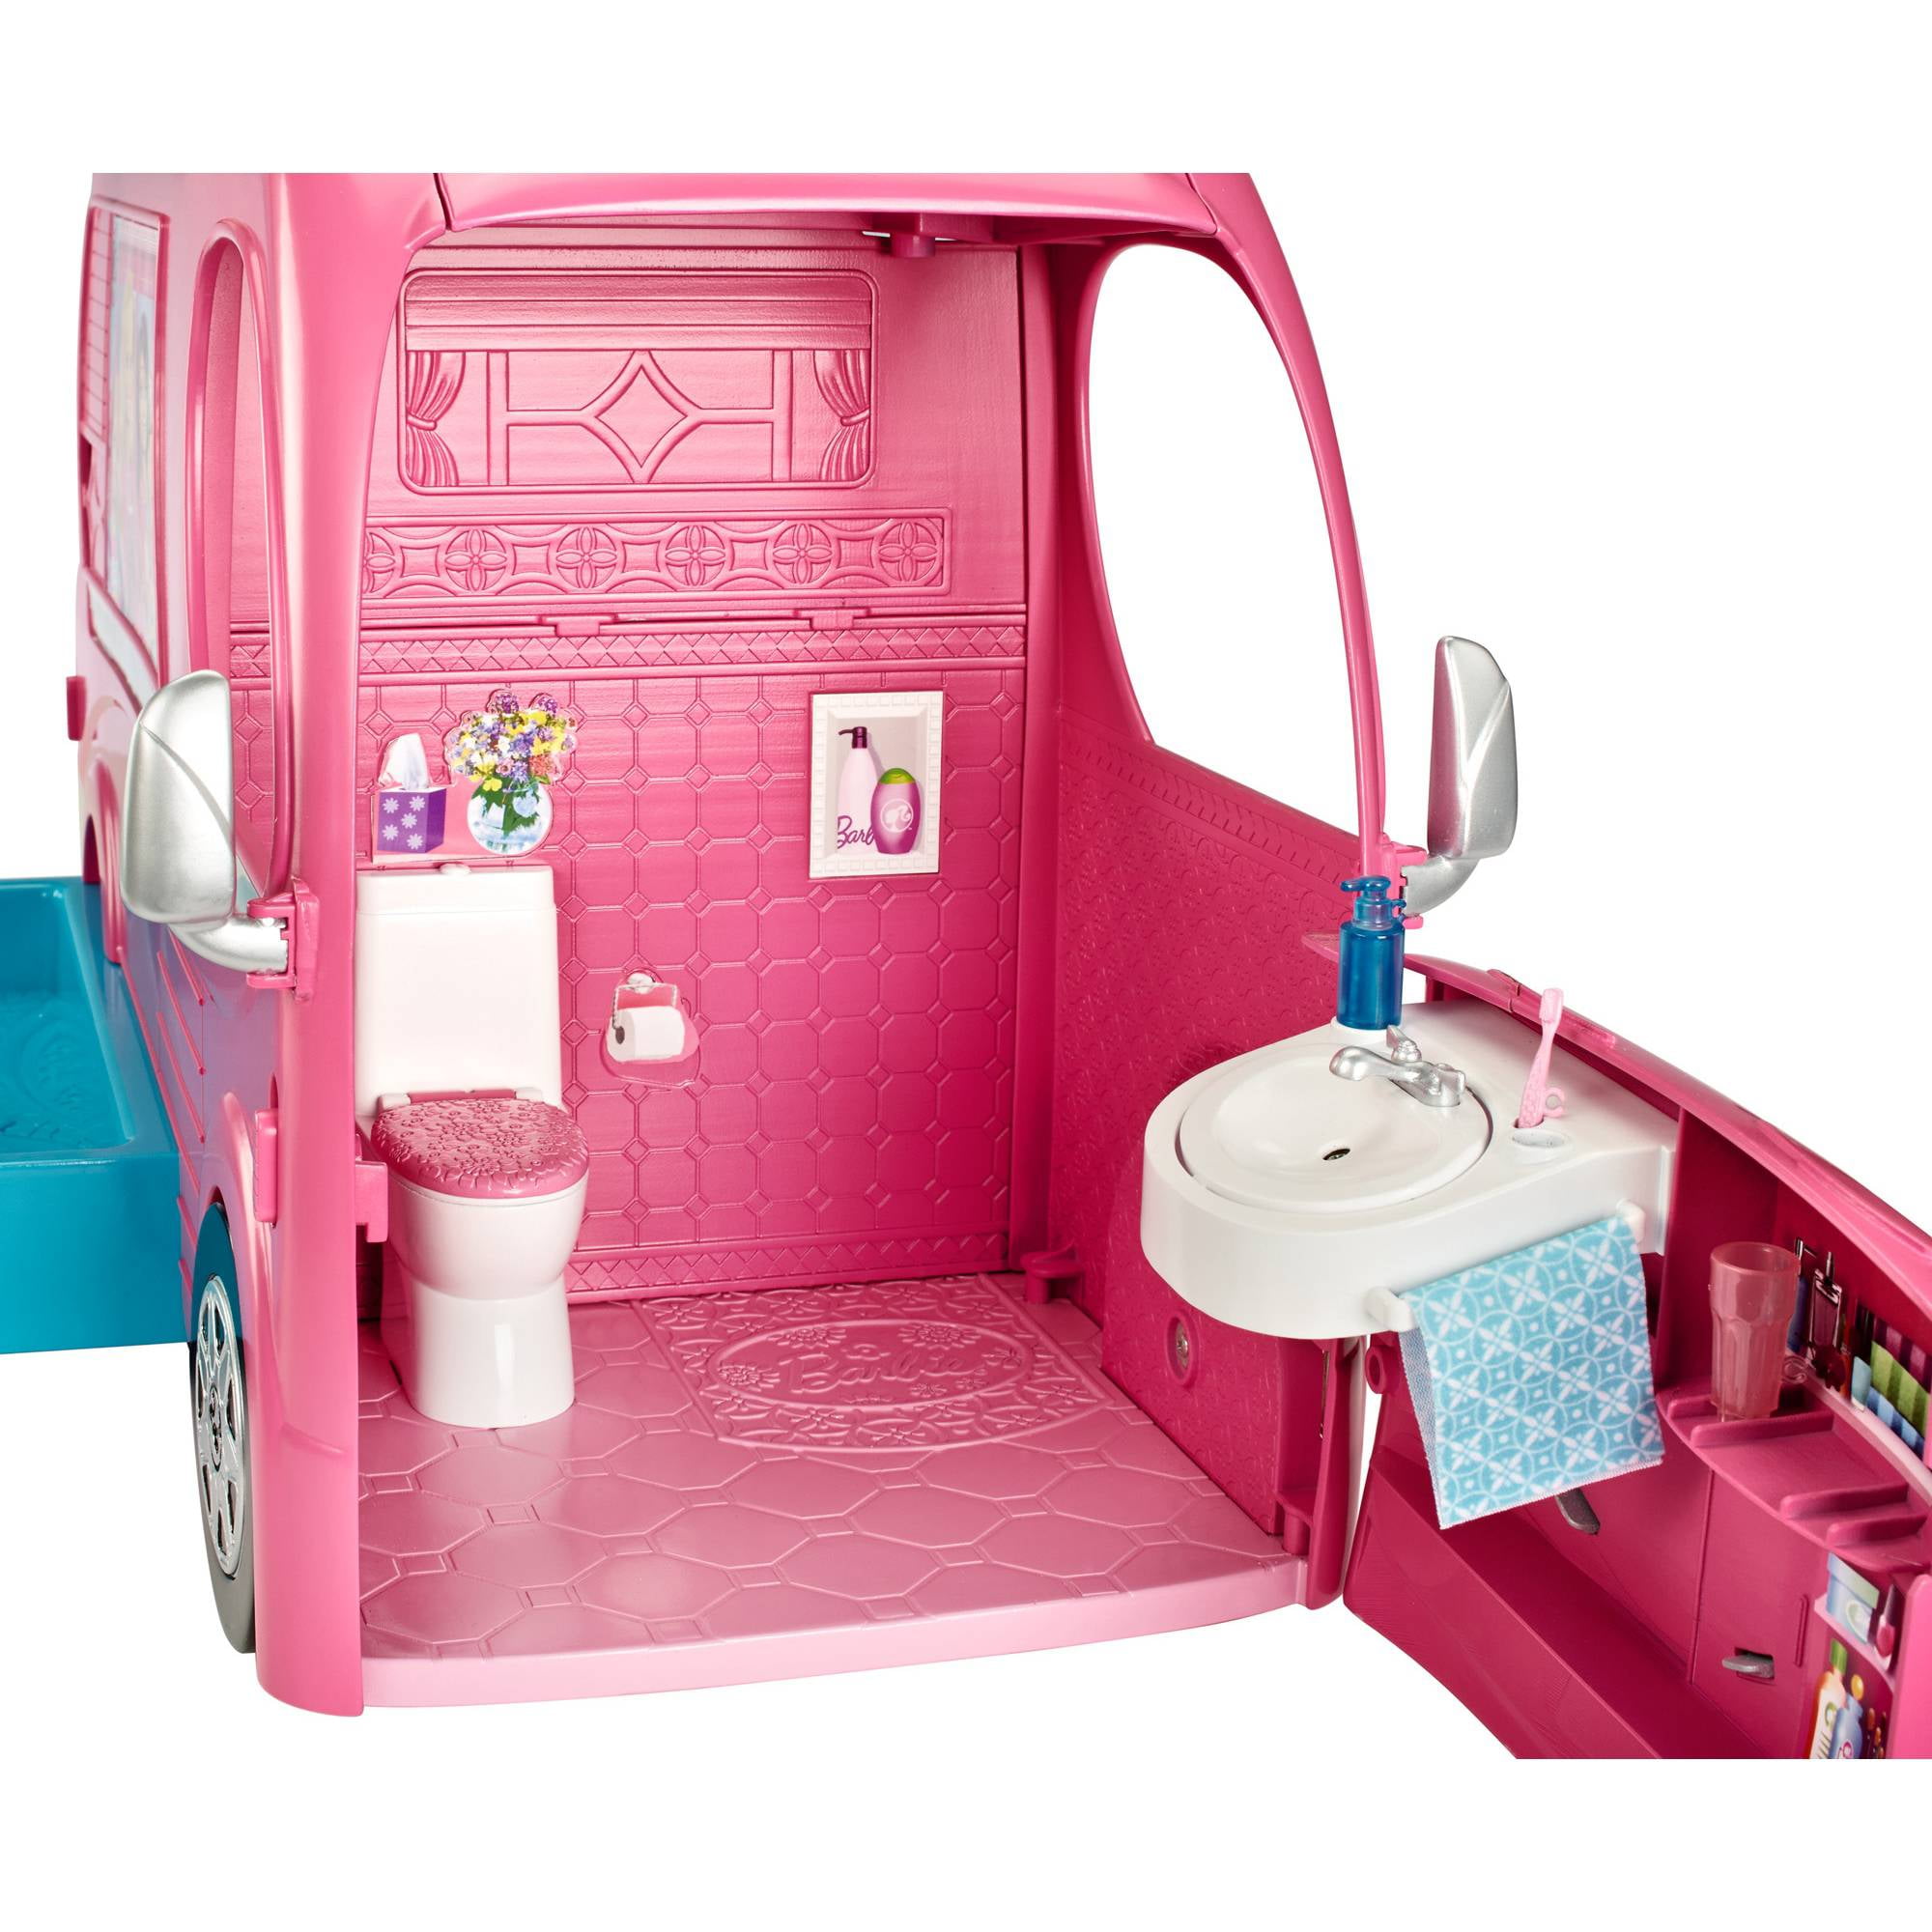 Машина для кукол купить. Фургон для путешествий Барби cjt42. Фургон автодом Барби cjt42. Фургон Mattel Barbie для путешествий Barbie Pop-up Camp cjt42. Дом фургон для Барби.